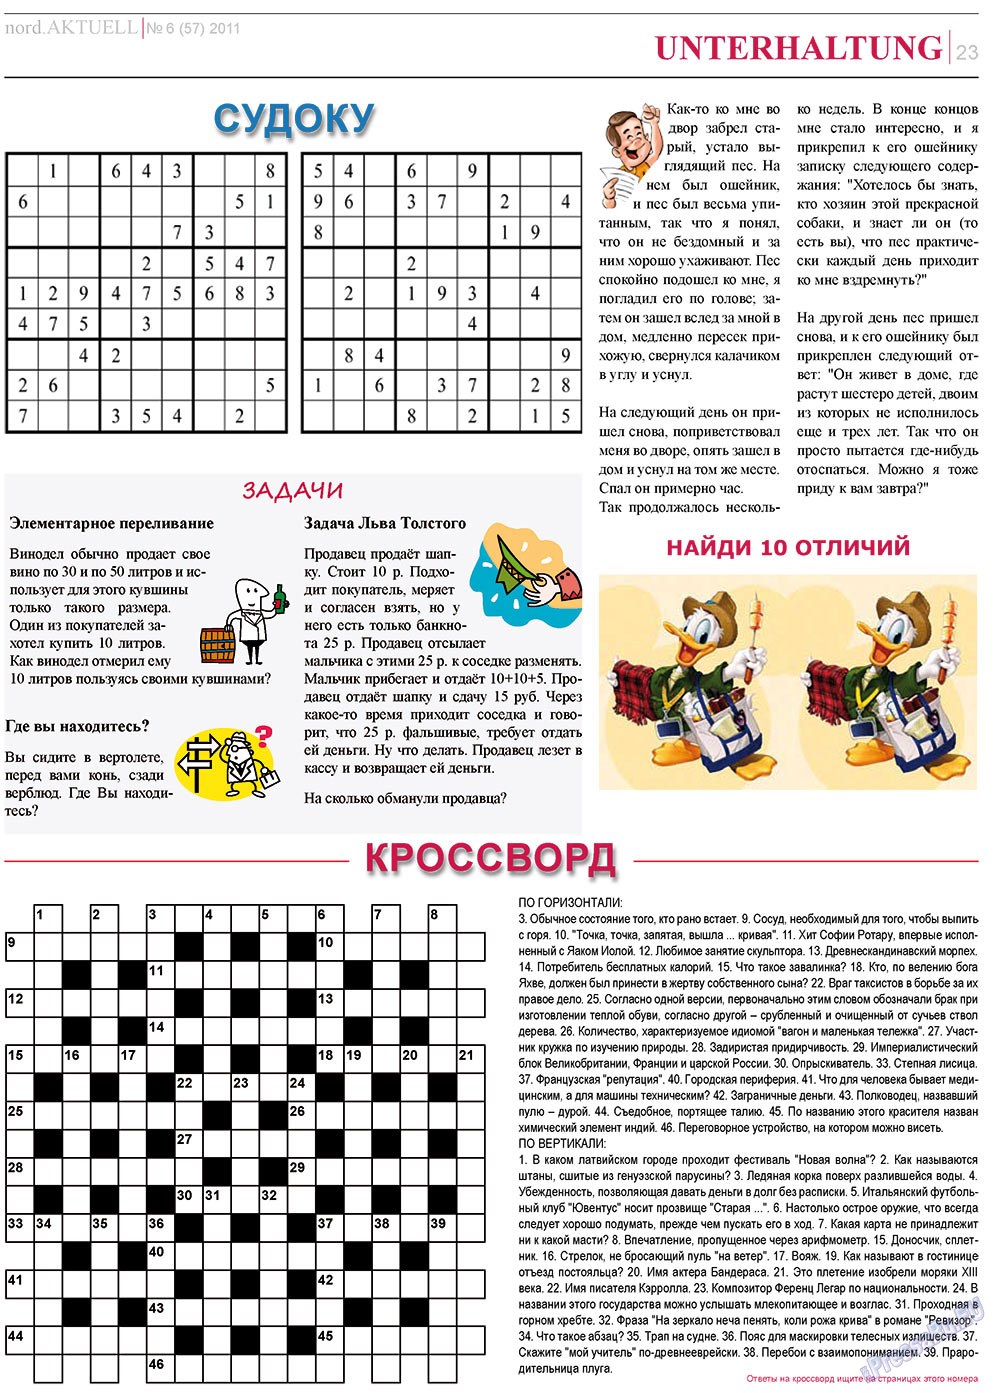 nord.Aktuell, газета. 2011 №6 стр.23